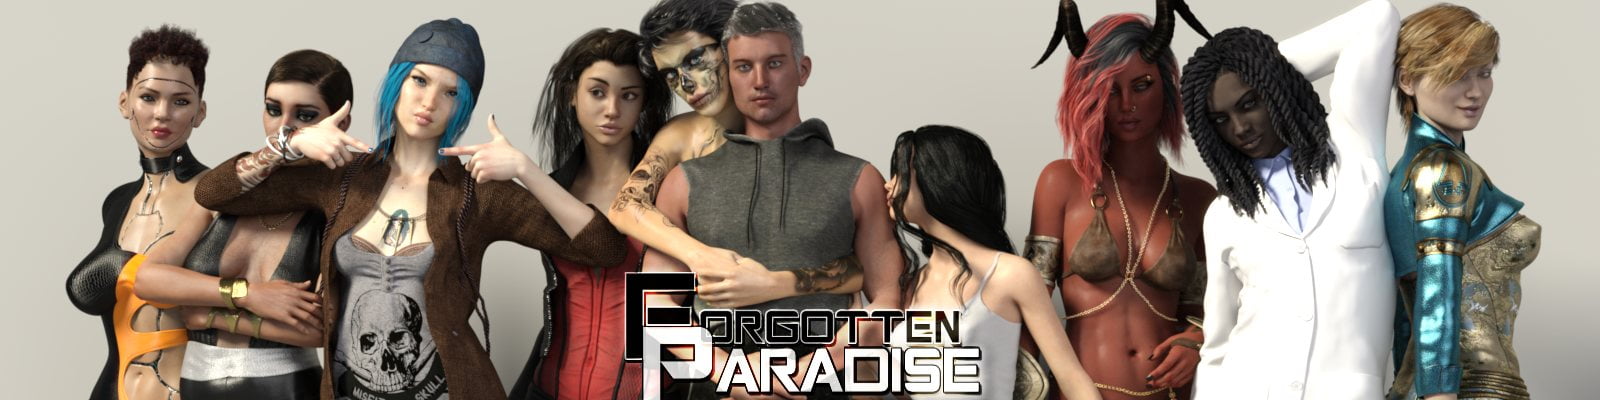 Forgotten Paradise [Void Star] Adult xxx Game Download